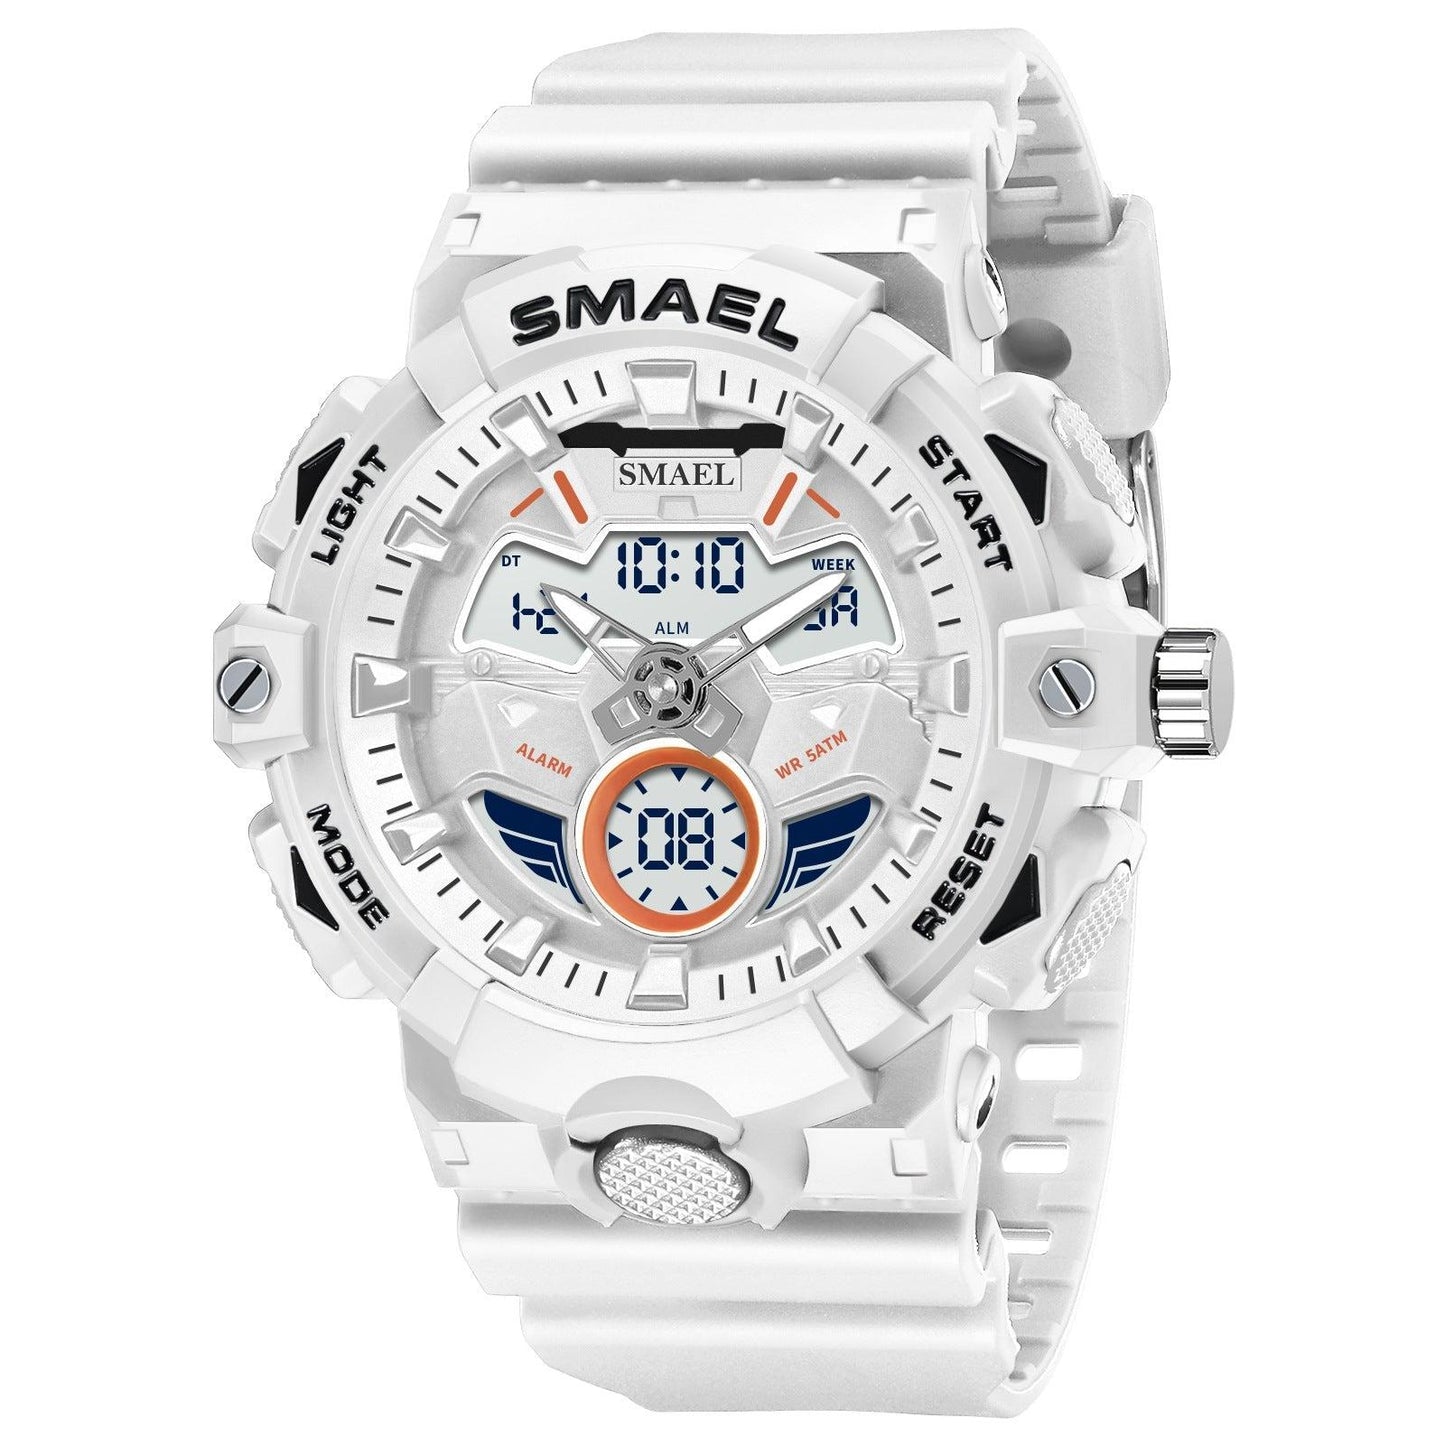 SMAEL Analog Digital Sports Waterproof Men's Watch 8085